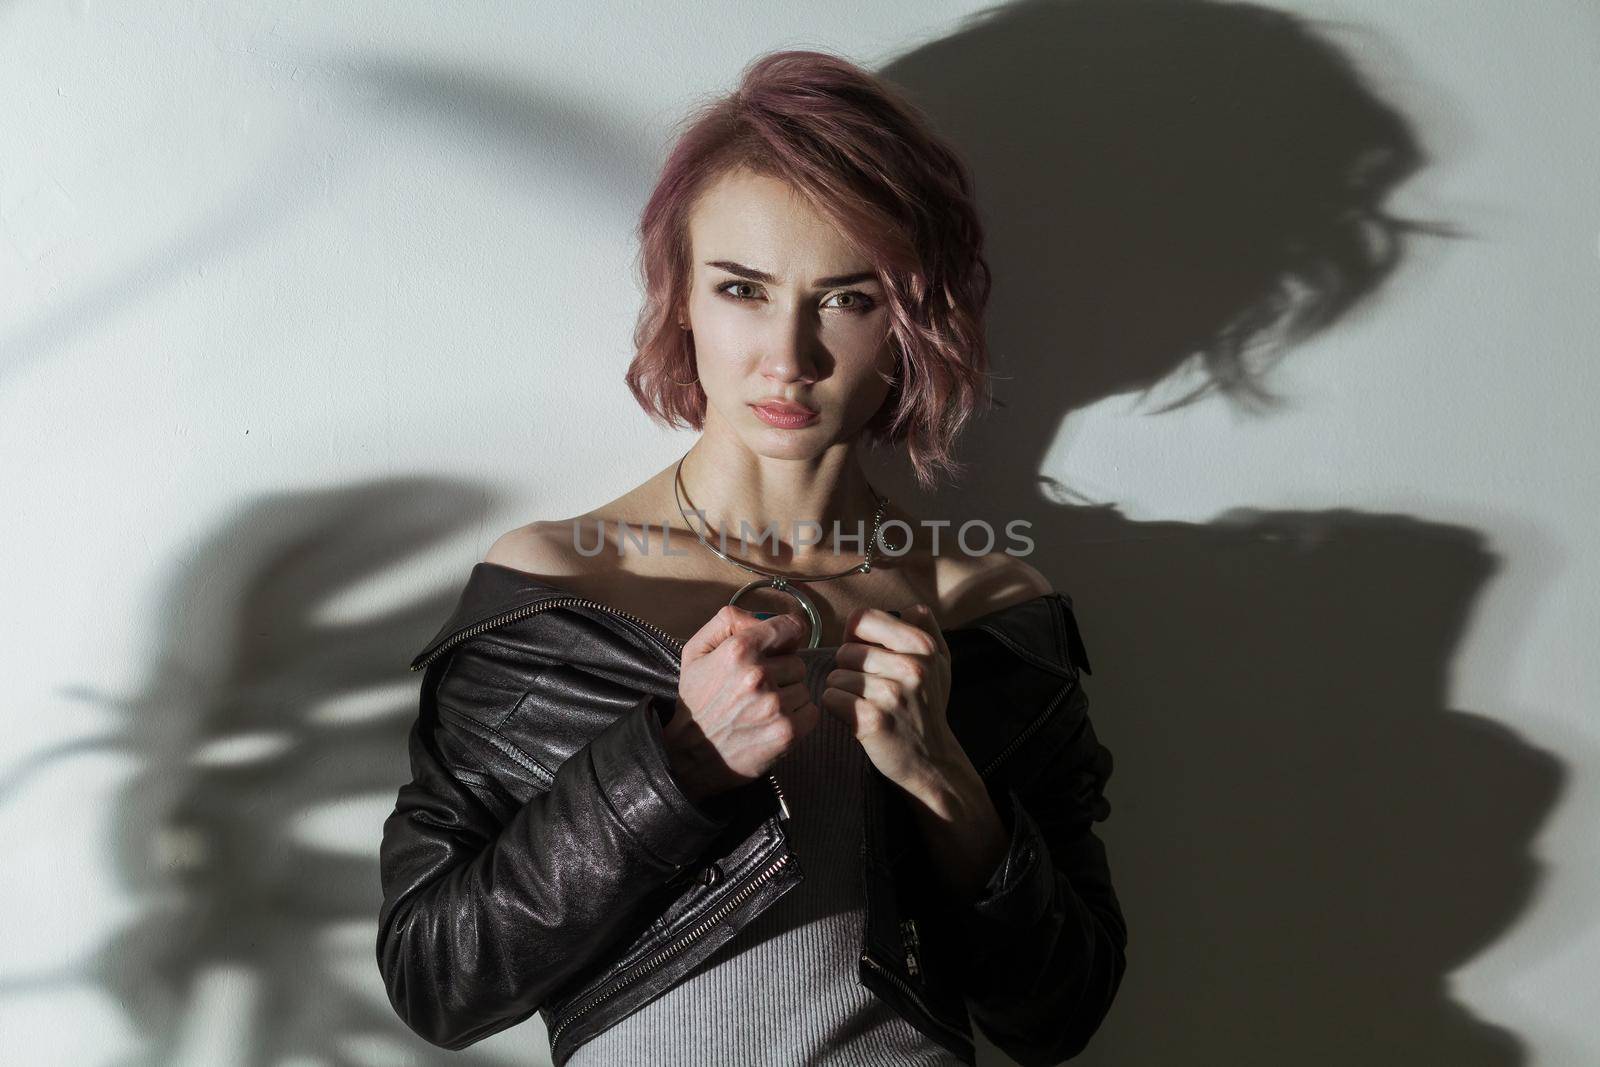 Female model posing near gray wall by Khosro1